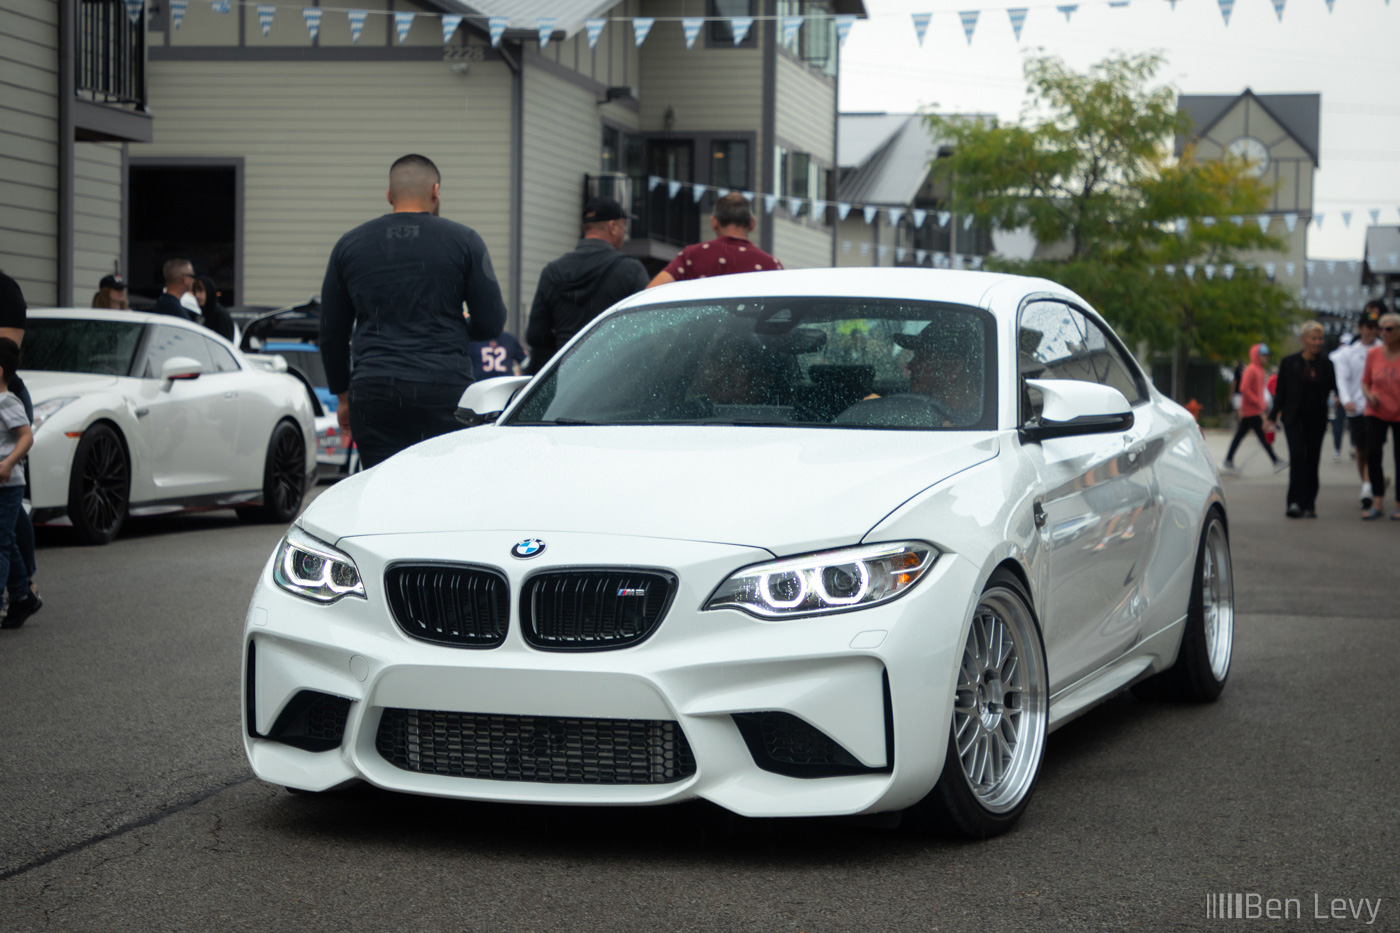 White BMW M2 at Iron Gate